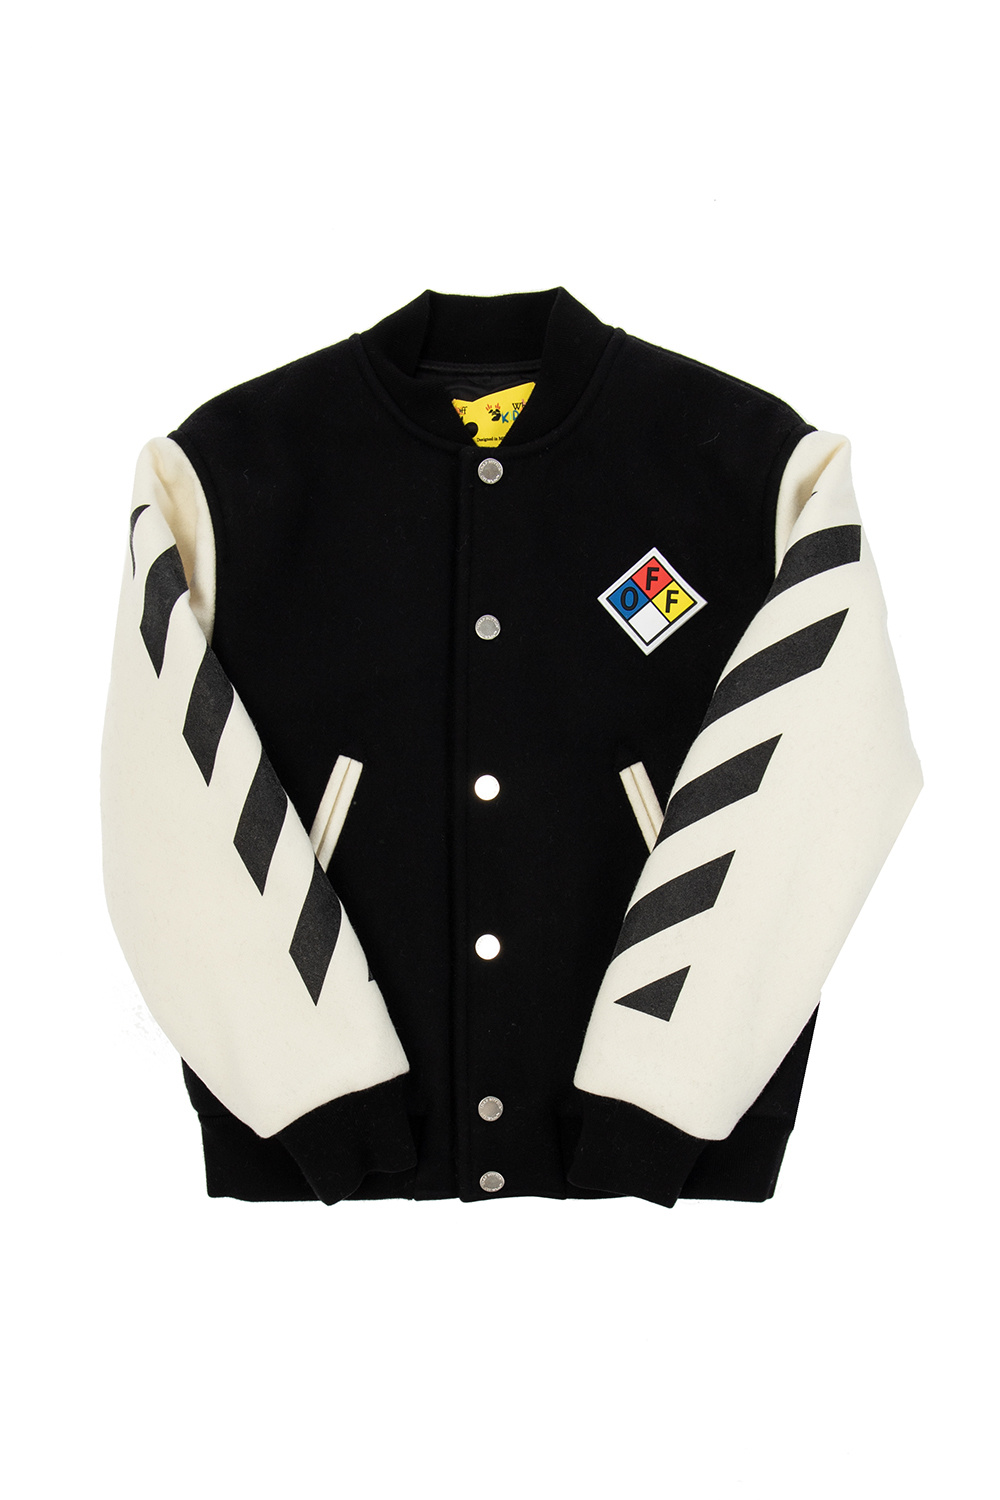 Off-White logo-appliqué bomber jacket - Black